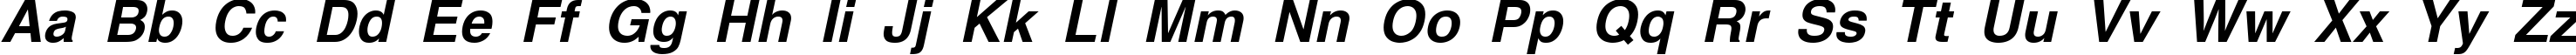 Пример написания английского алфавита шрифтом AG_Helvetica Bold Italic